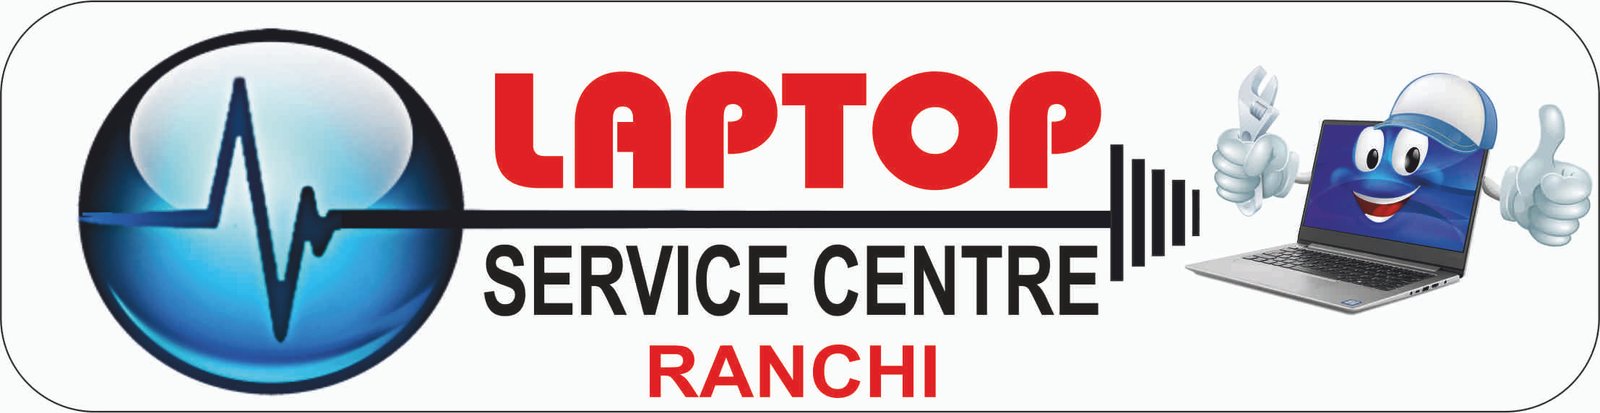 Laptop Service Ranchi || Service Price 499/- Call093349 87745